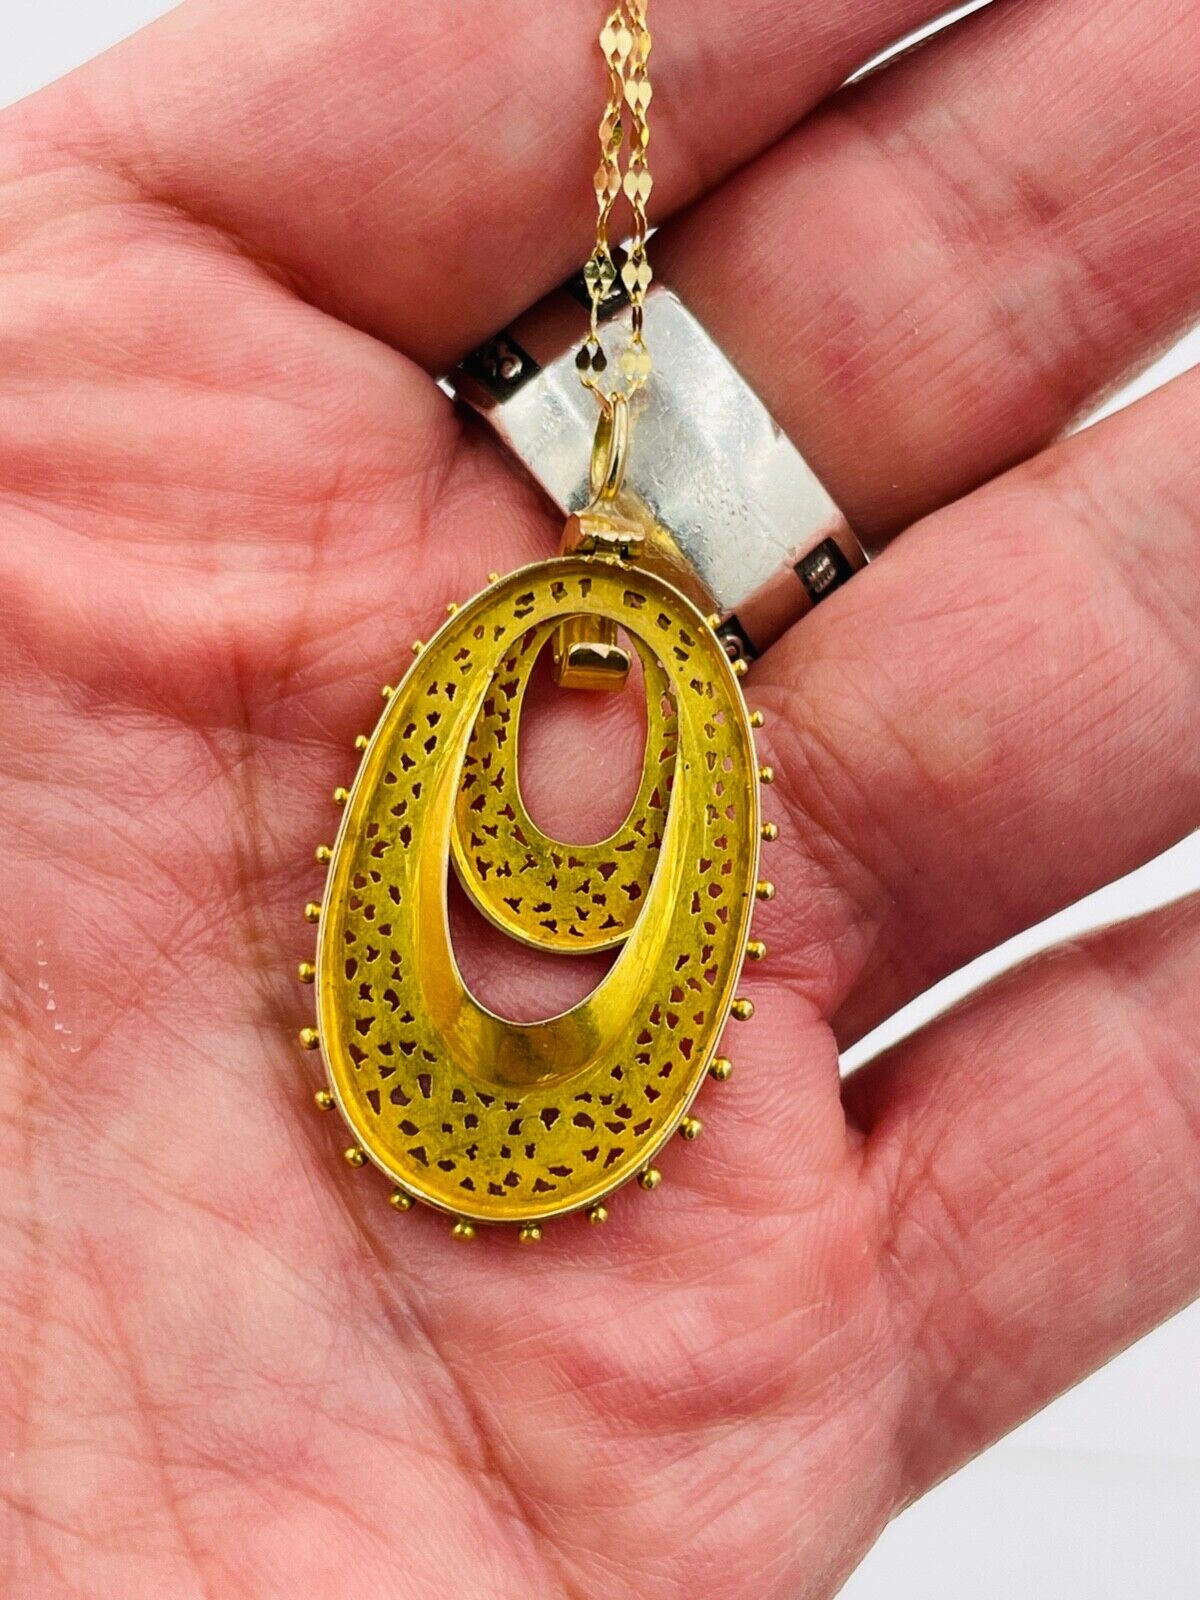 Antique 18k yellow Gold Filigree Pendant Necklace Victorian